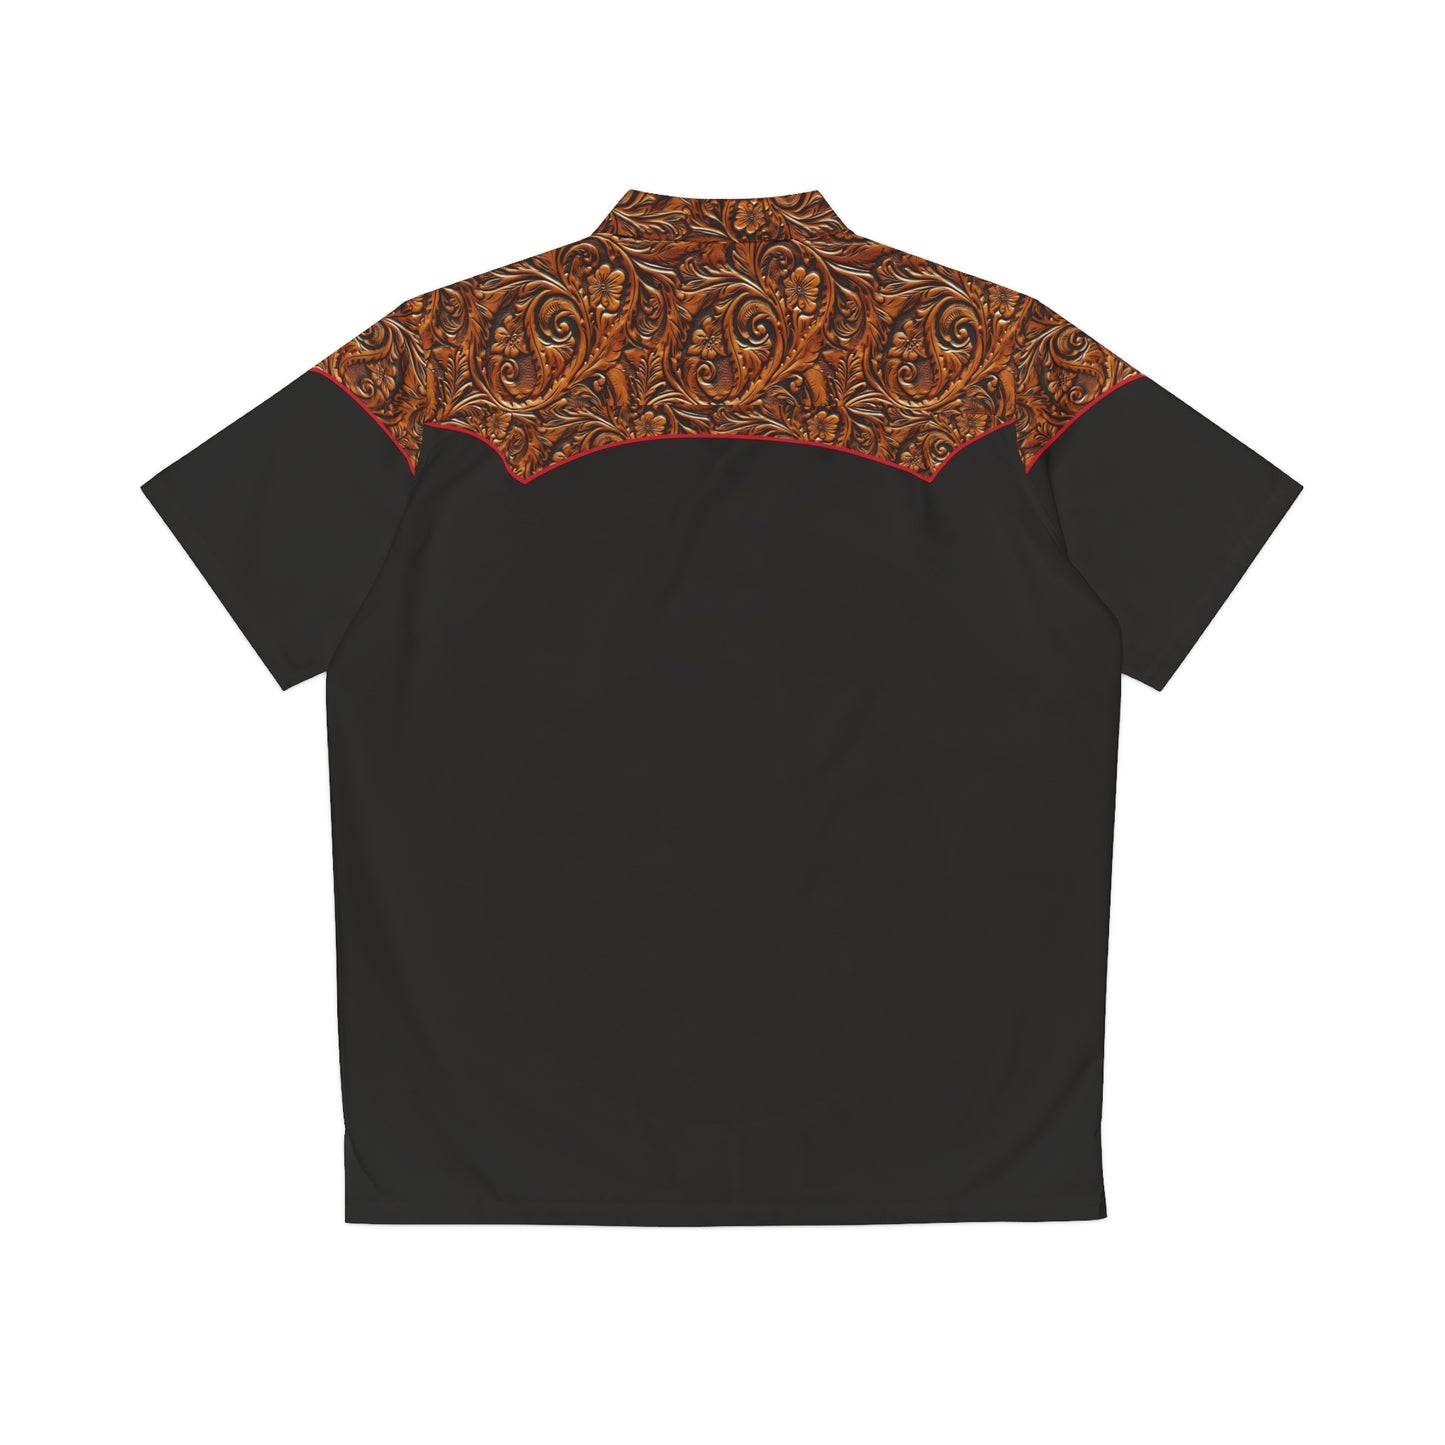 Tooled Leather Aloha Shirt